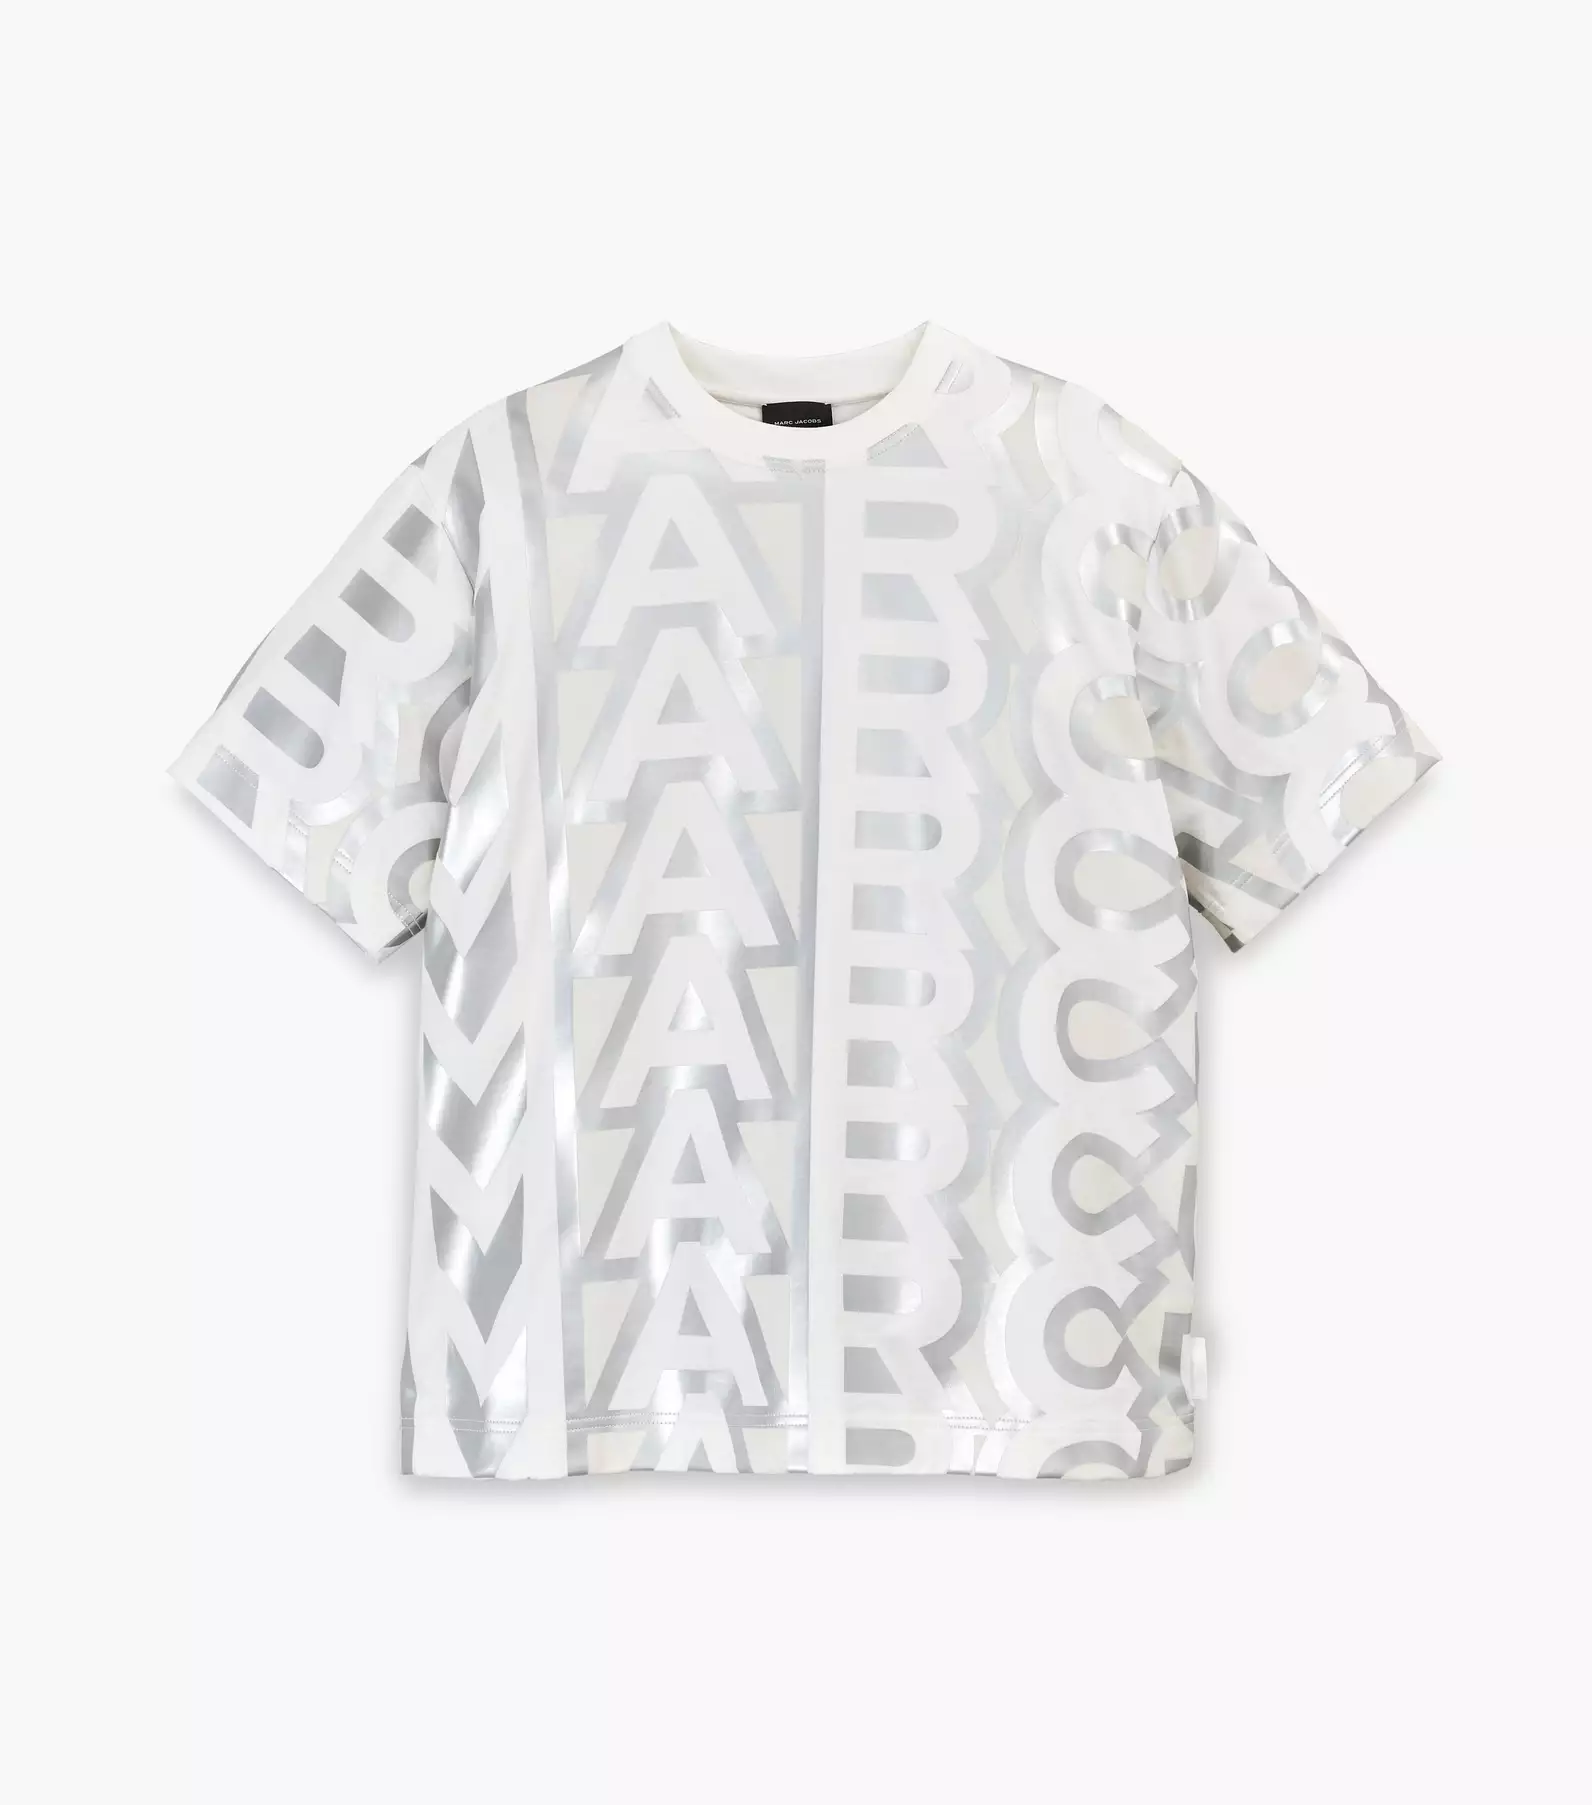 Marc Jacobs The Monogram Big T-Shirt in Gunmetal/Apple